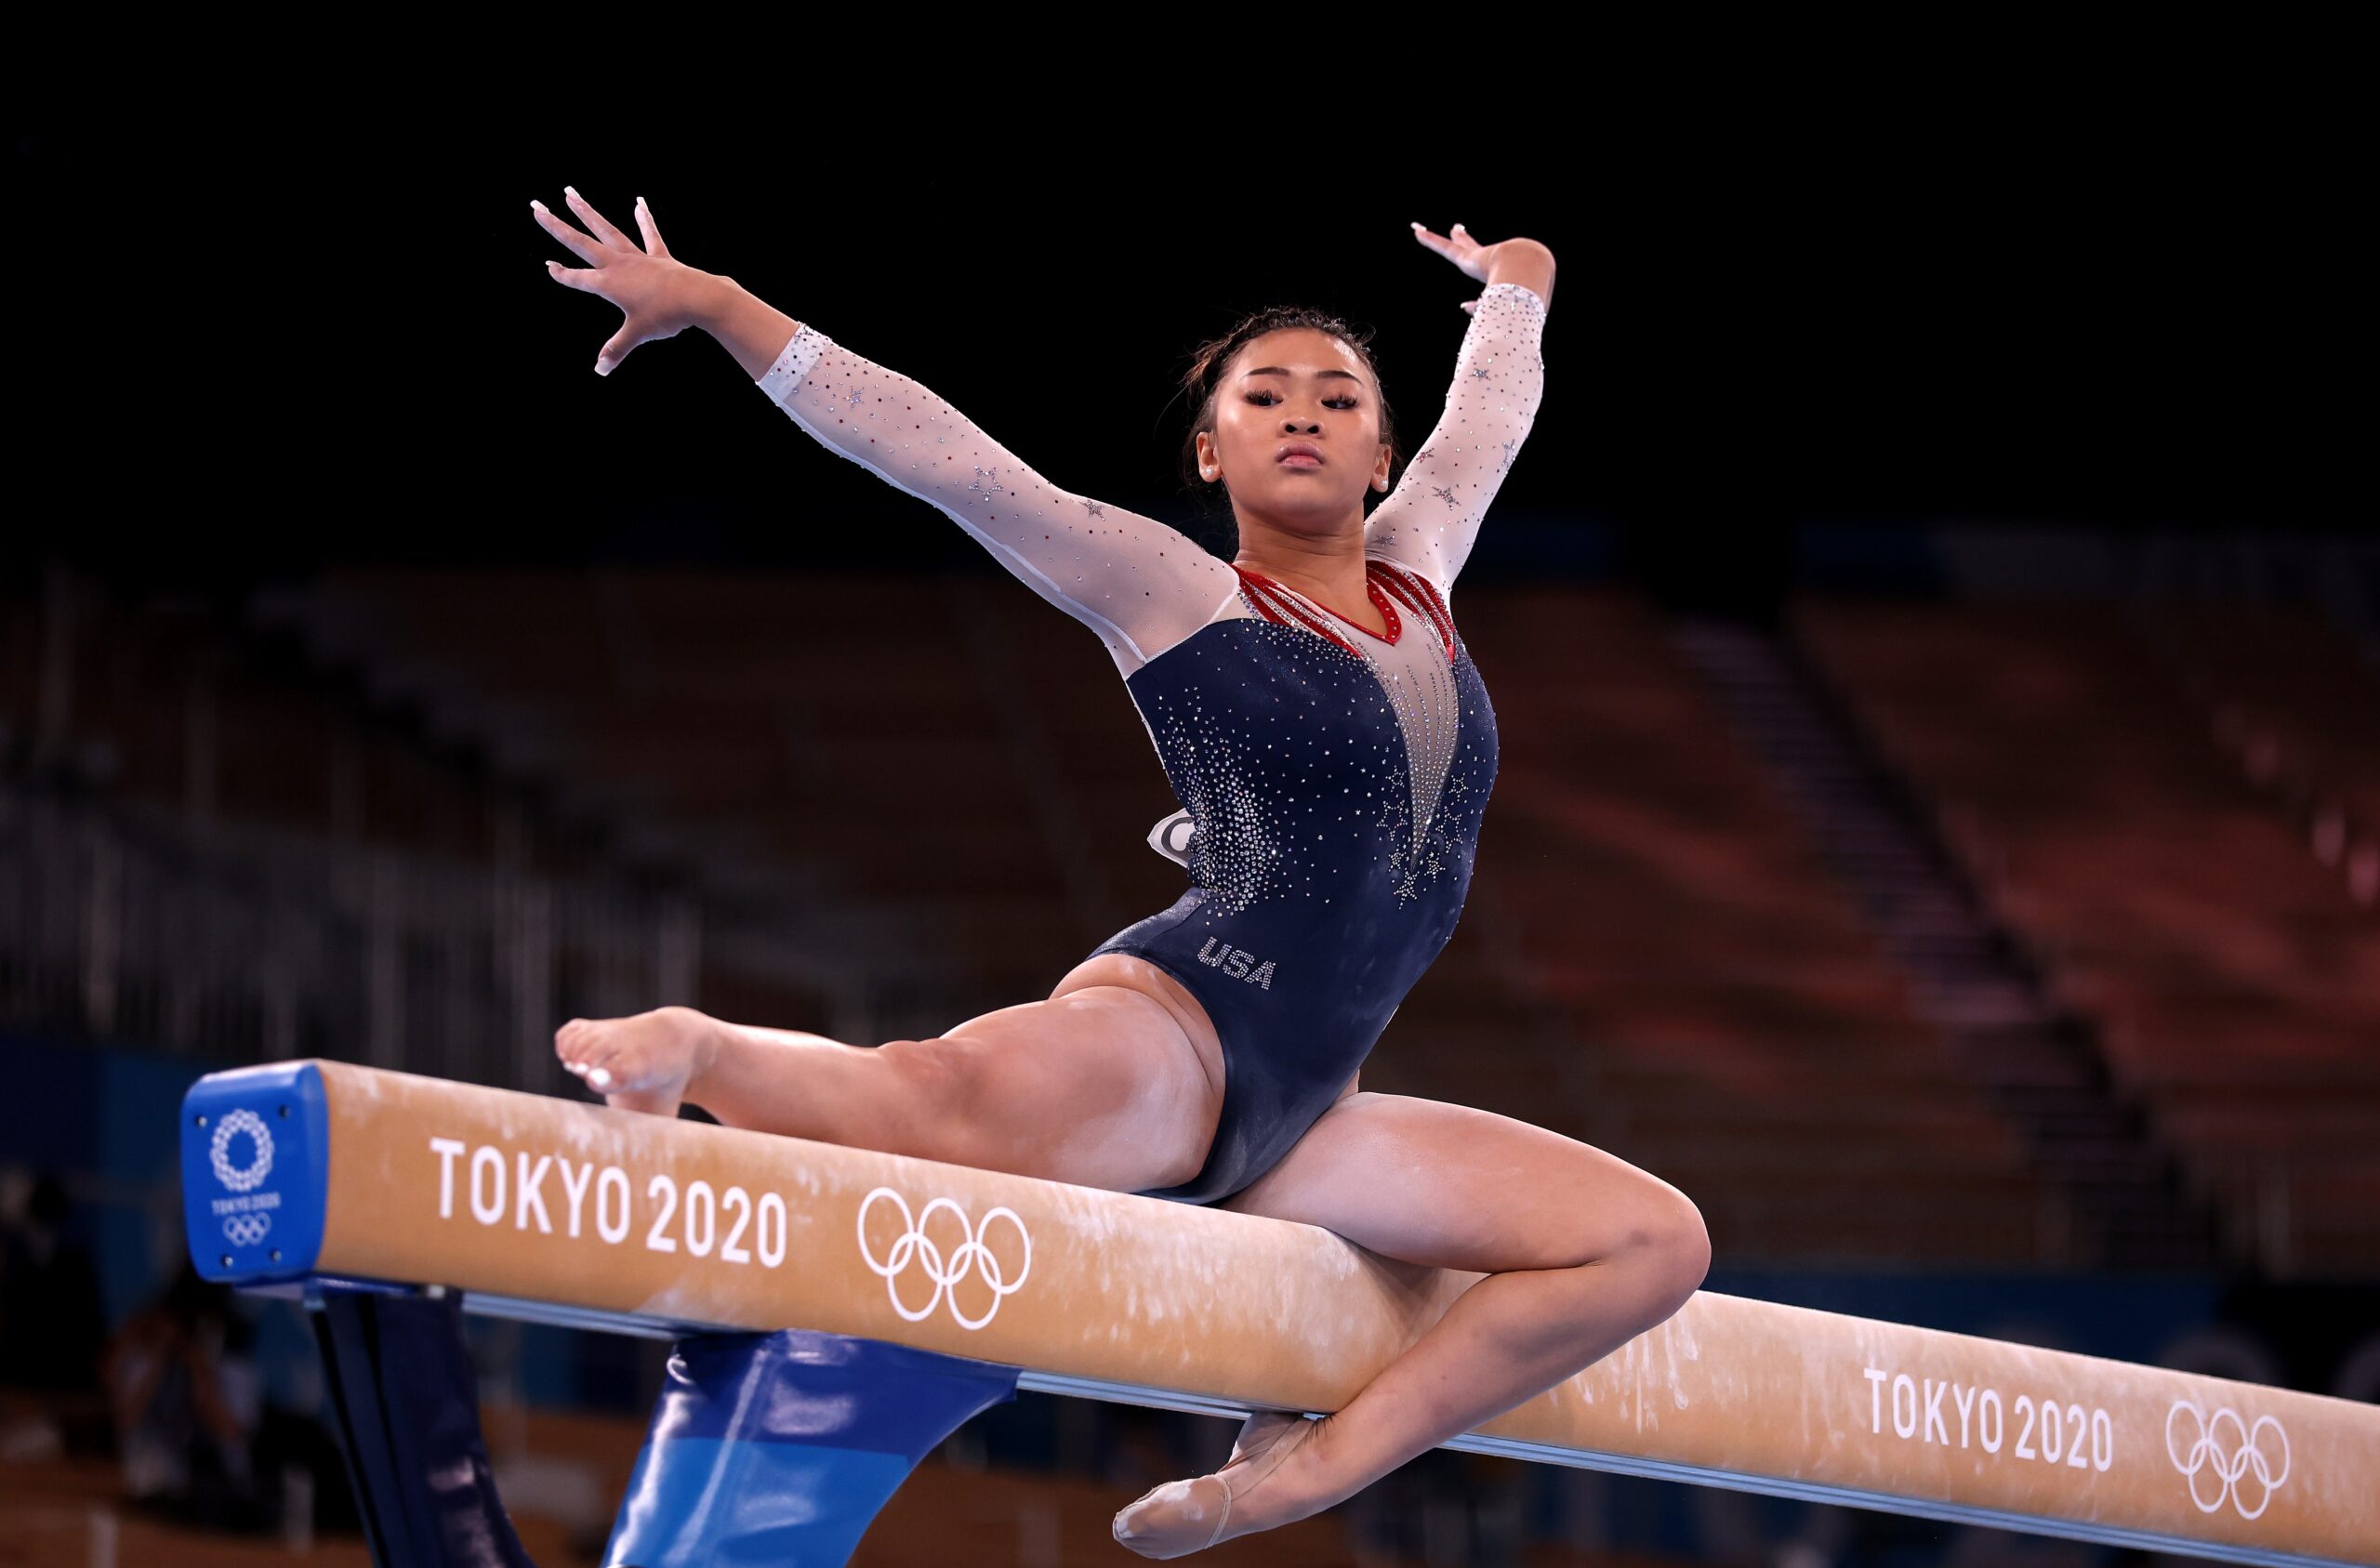 American Sunisa Lee tops Olympic podium in women’s allaround